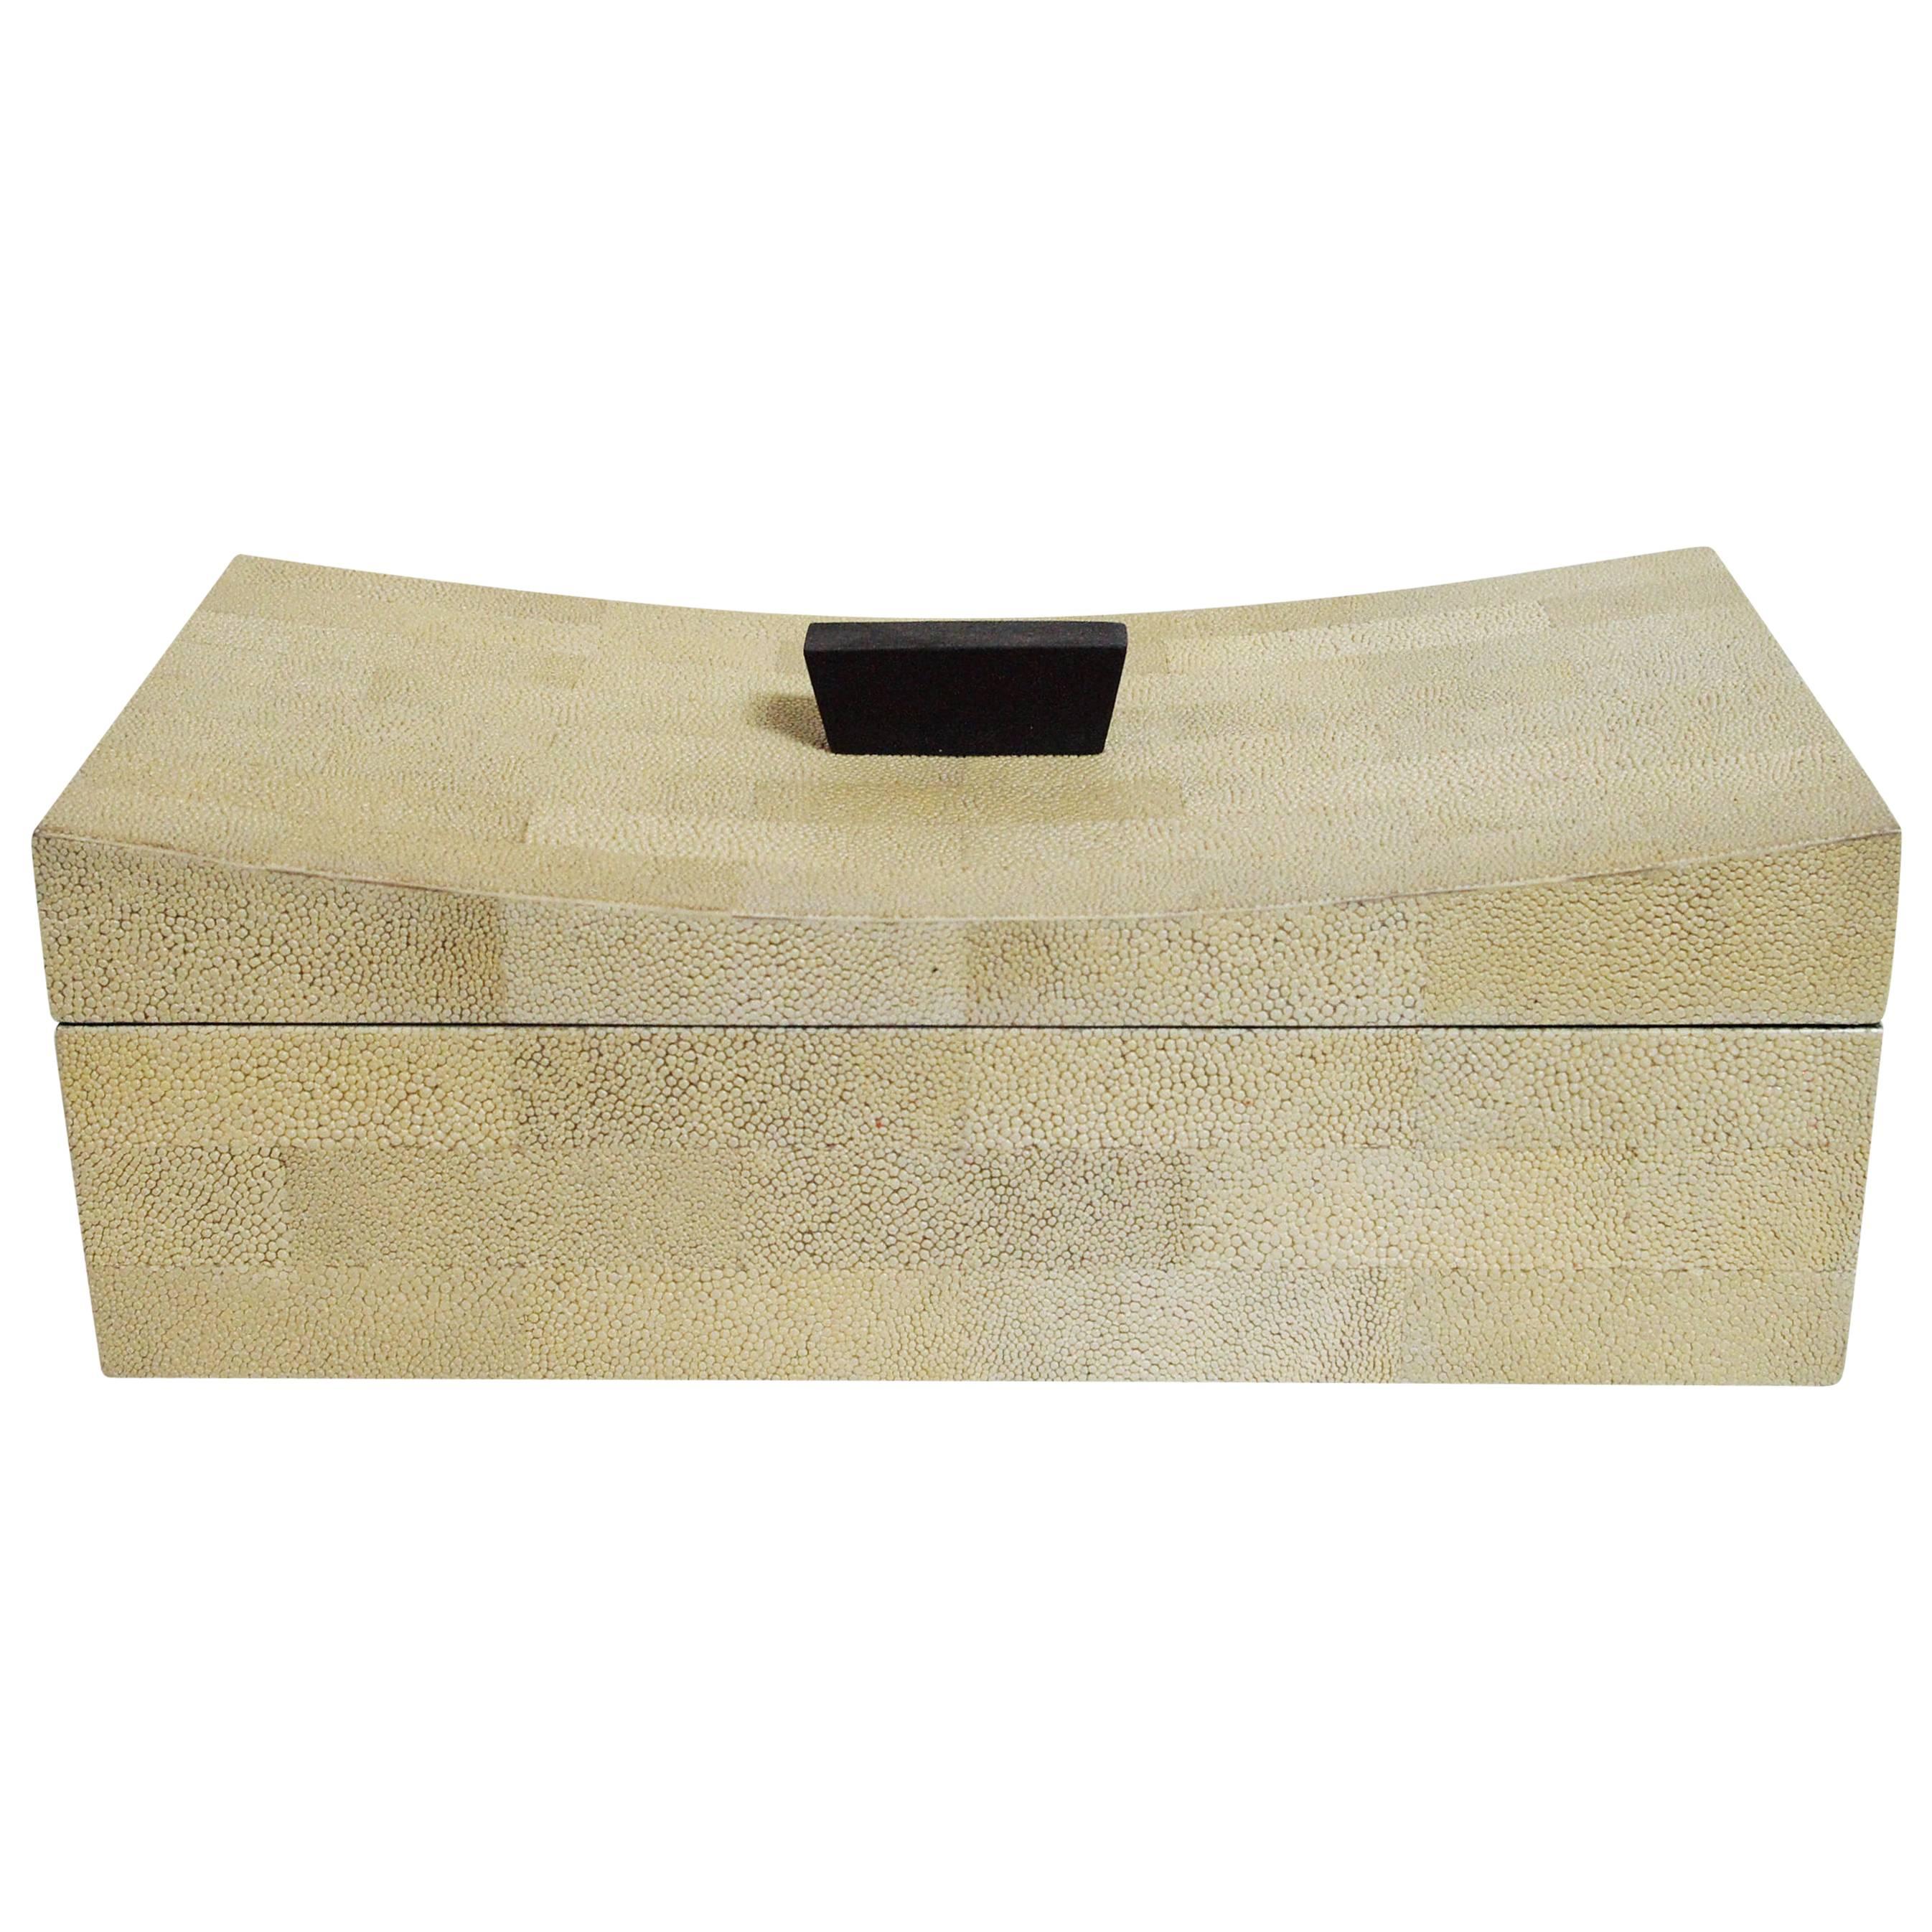 Beige Curved Shagreen Box by Fabio Ltd